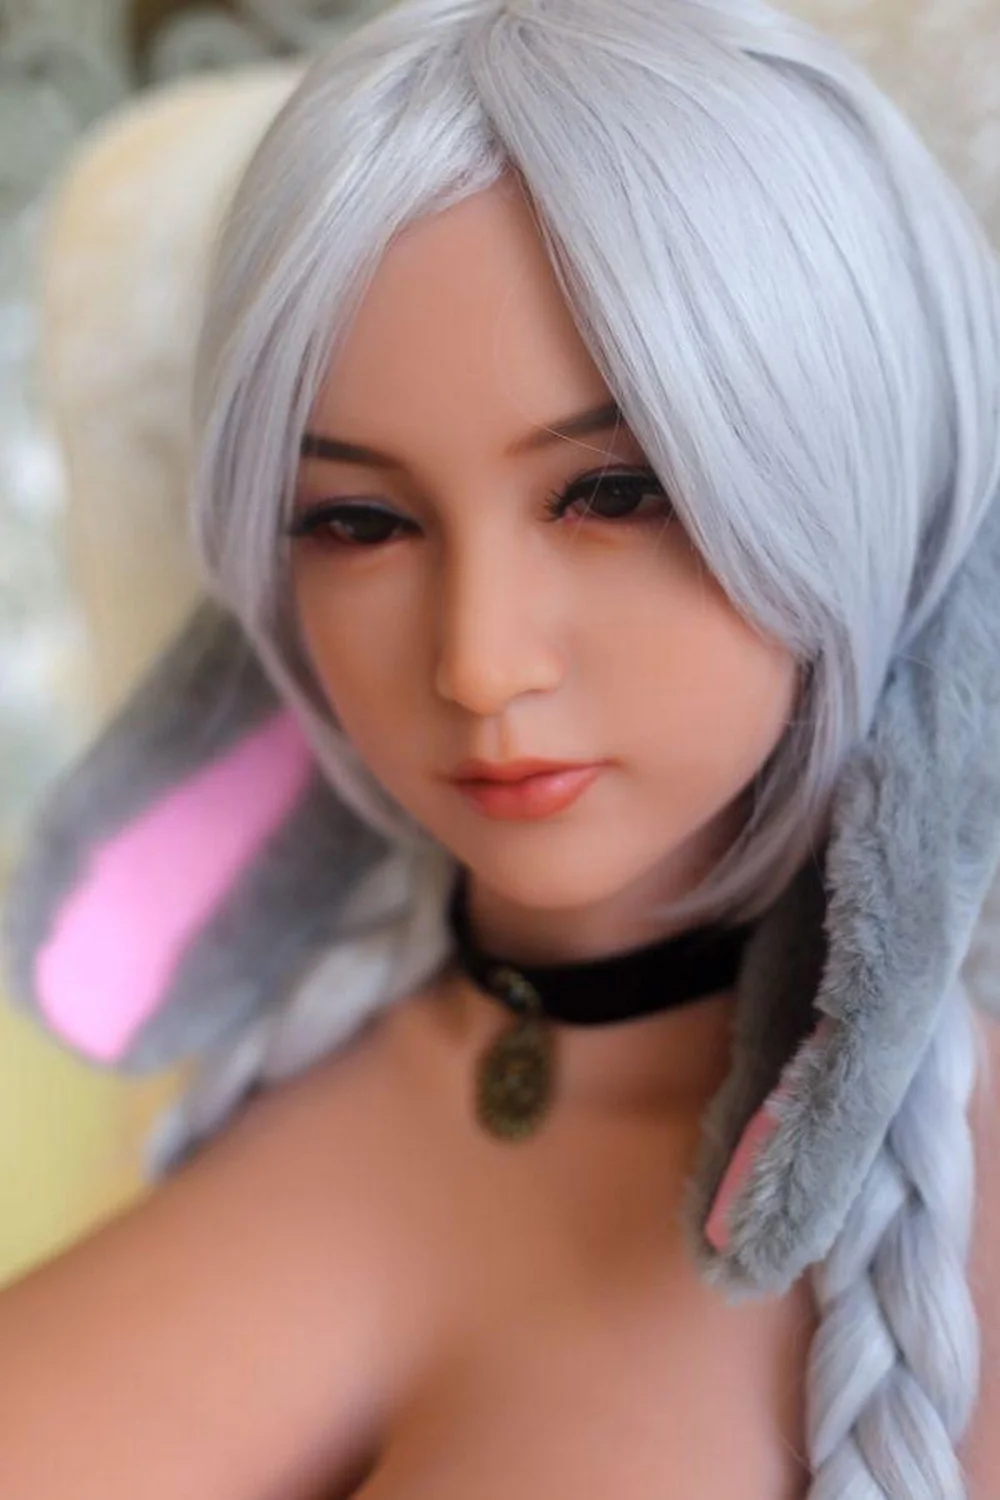 BBW sex doll with gray bunny ears headband